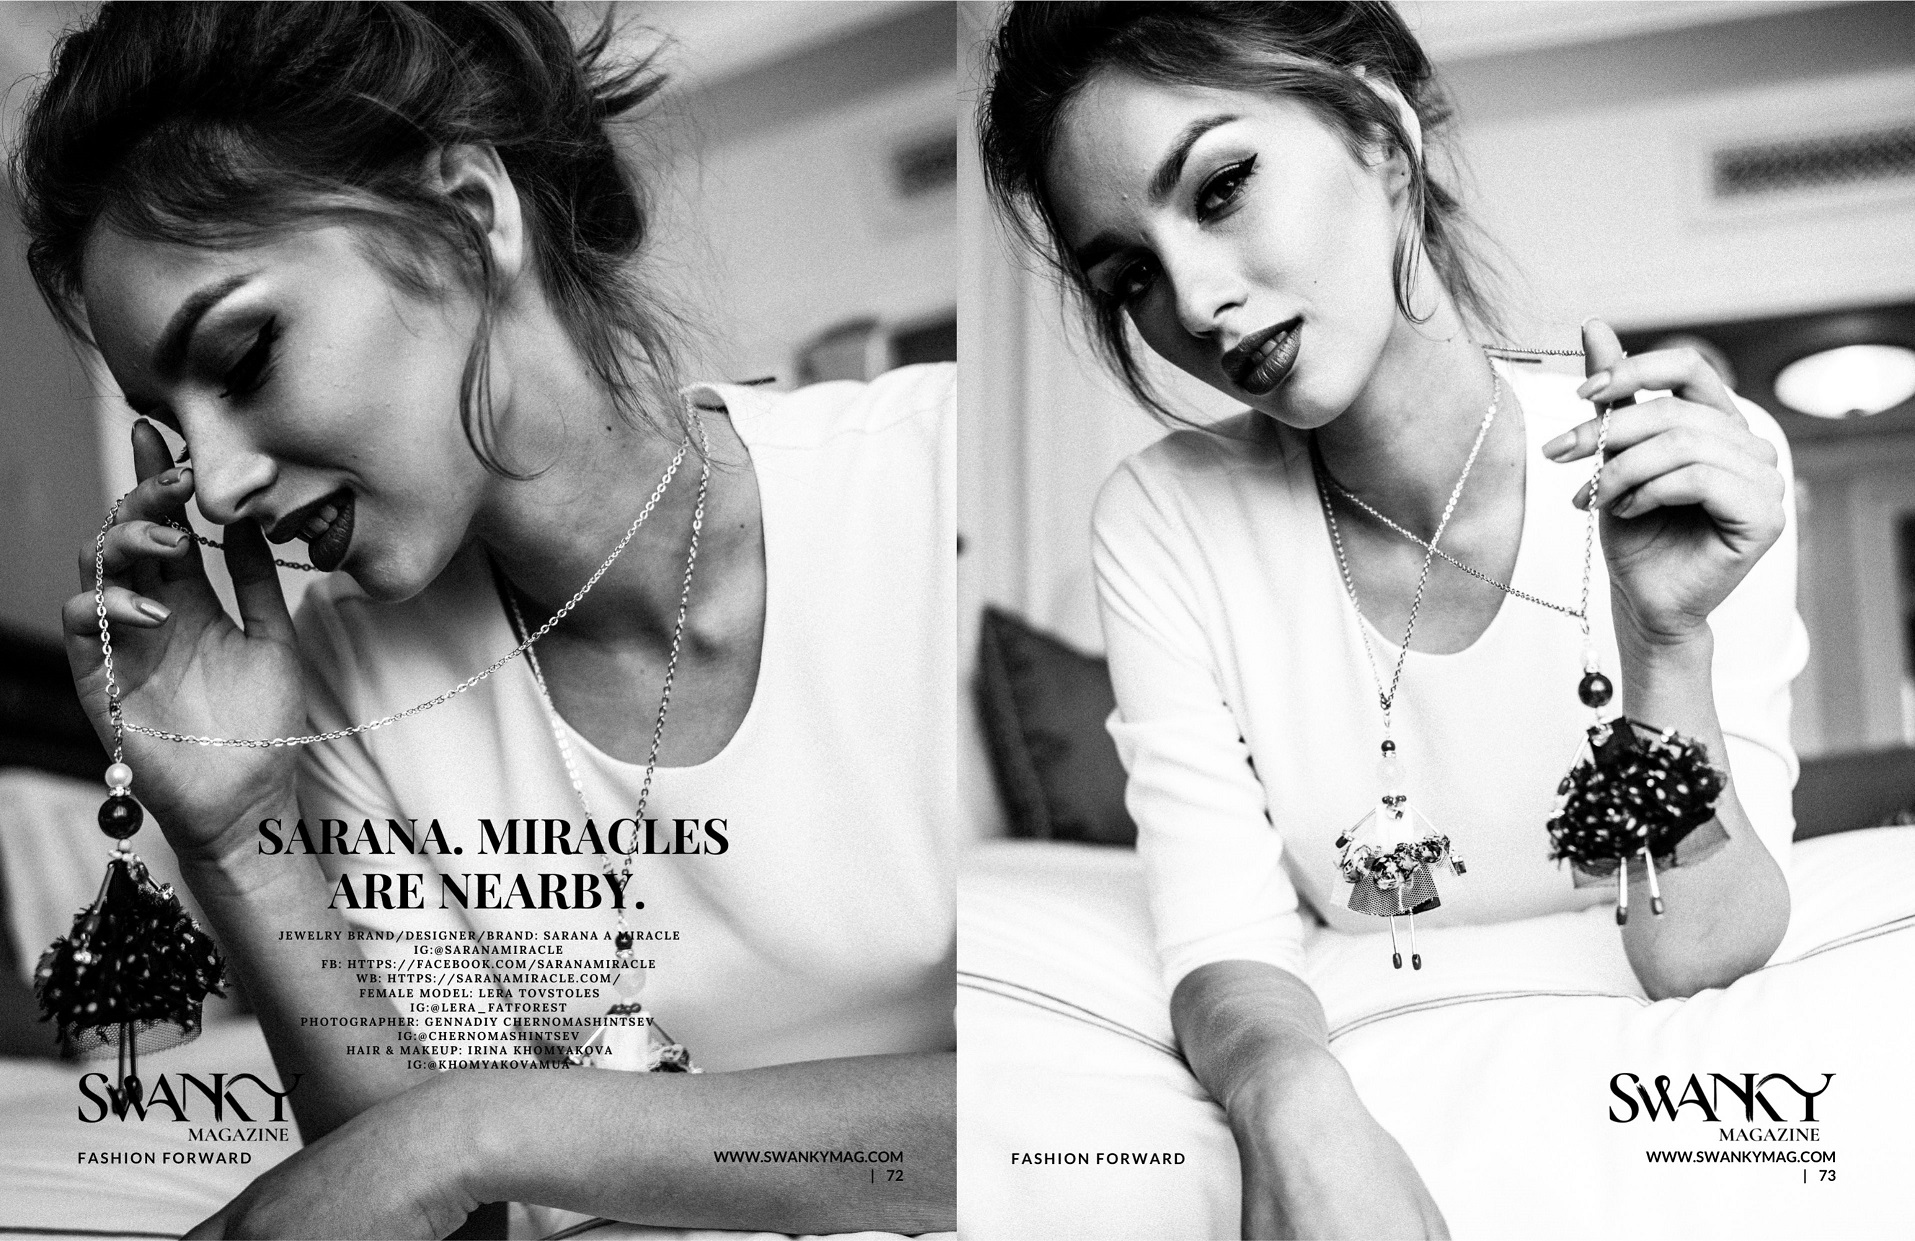 Photos of the SARANA brand in magazine SWANKY